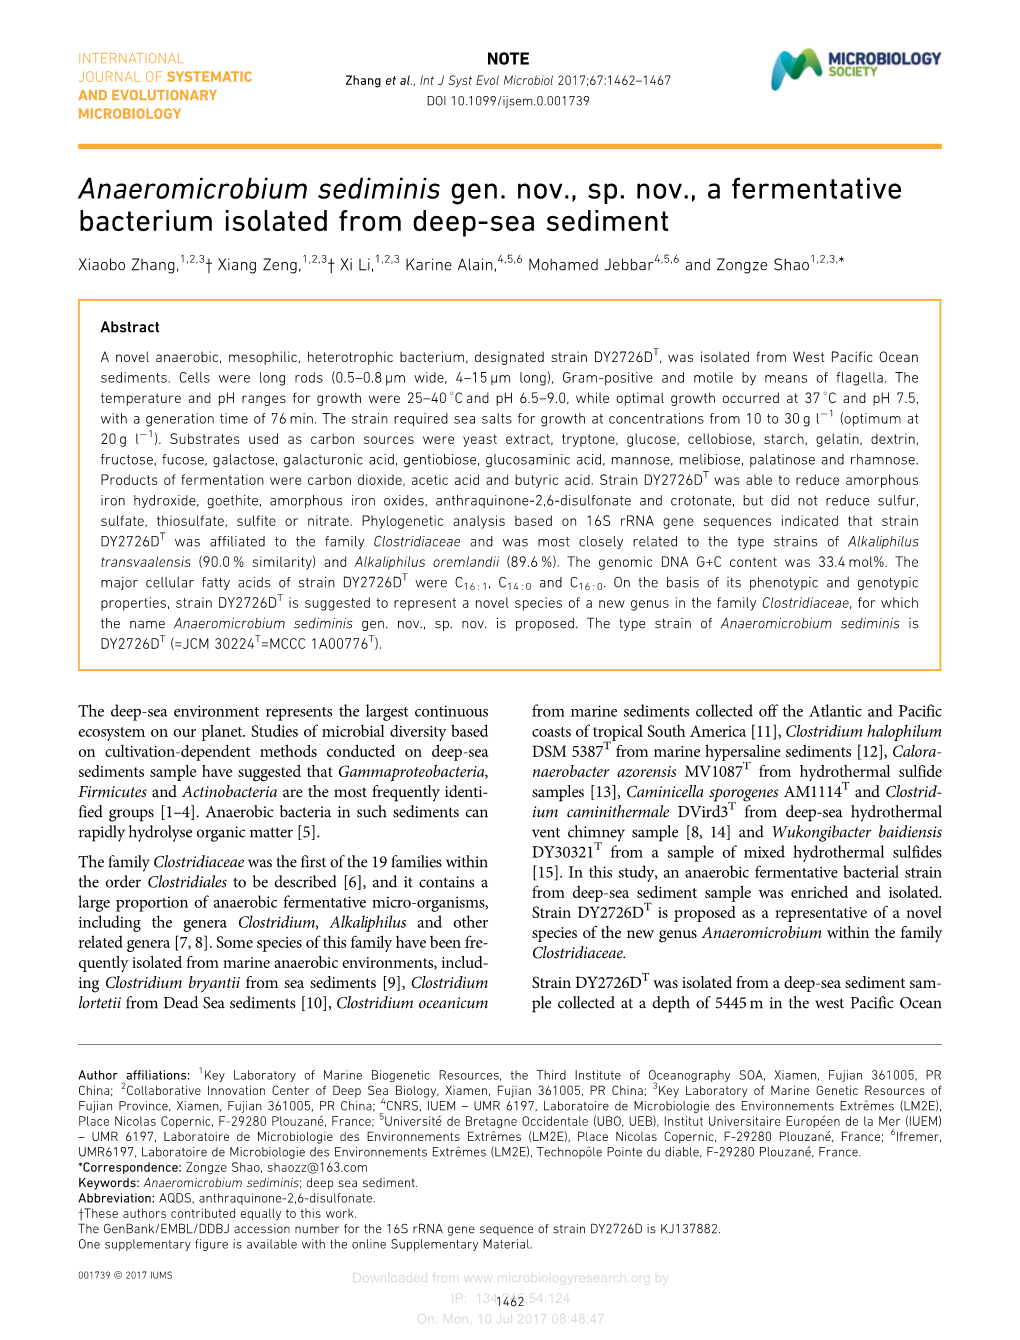 Anaeromicrobium Sediminis Gen. Nov., Sp. Nov., a Fermentative Bacterium Isolated from Deep-Sea Sediment